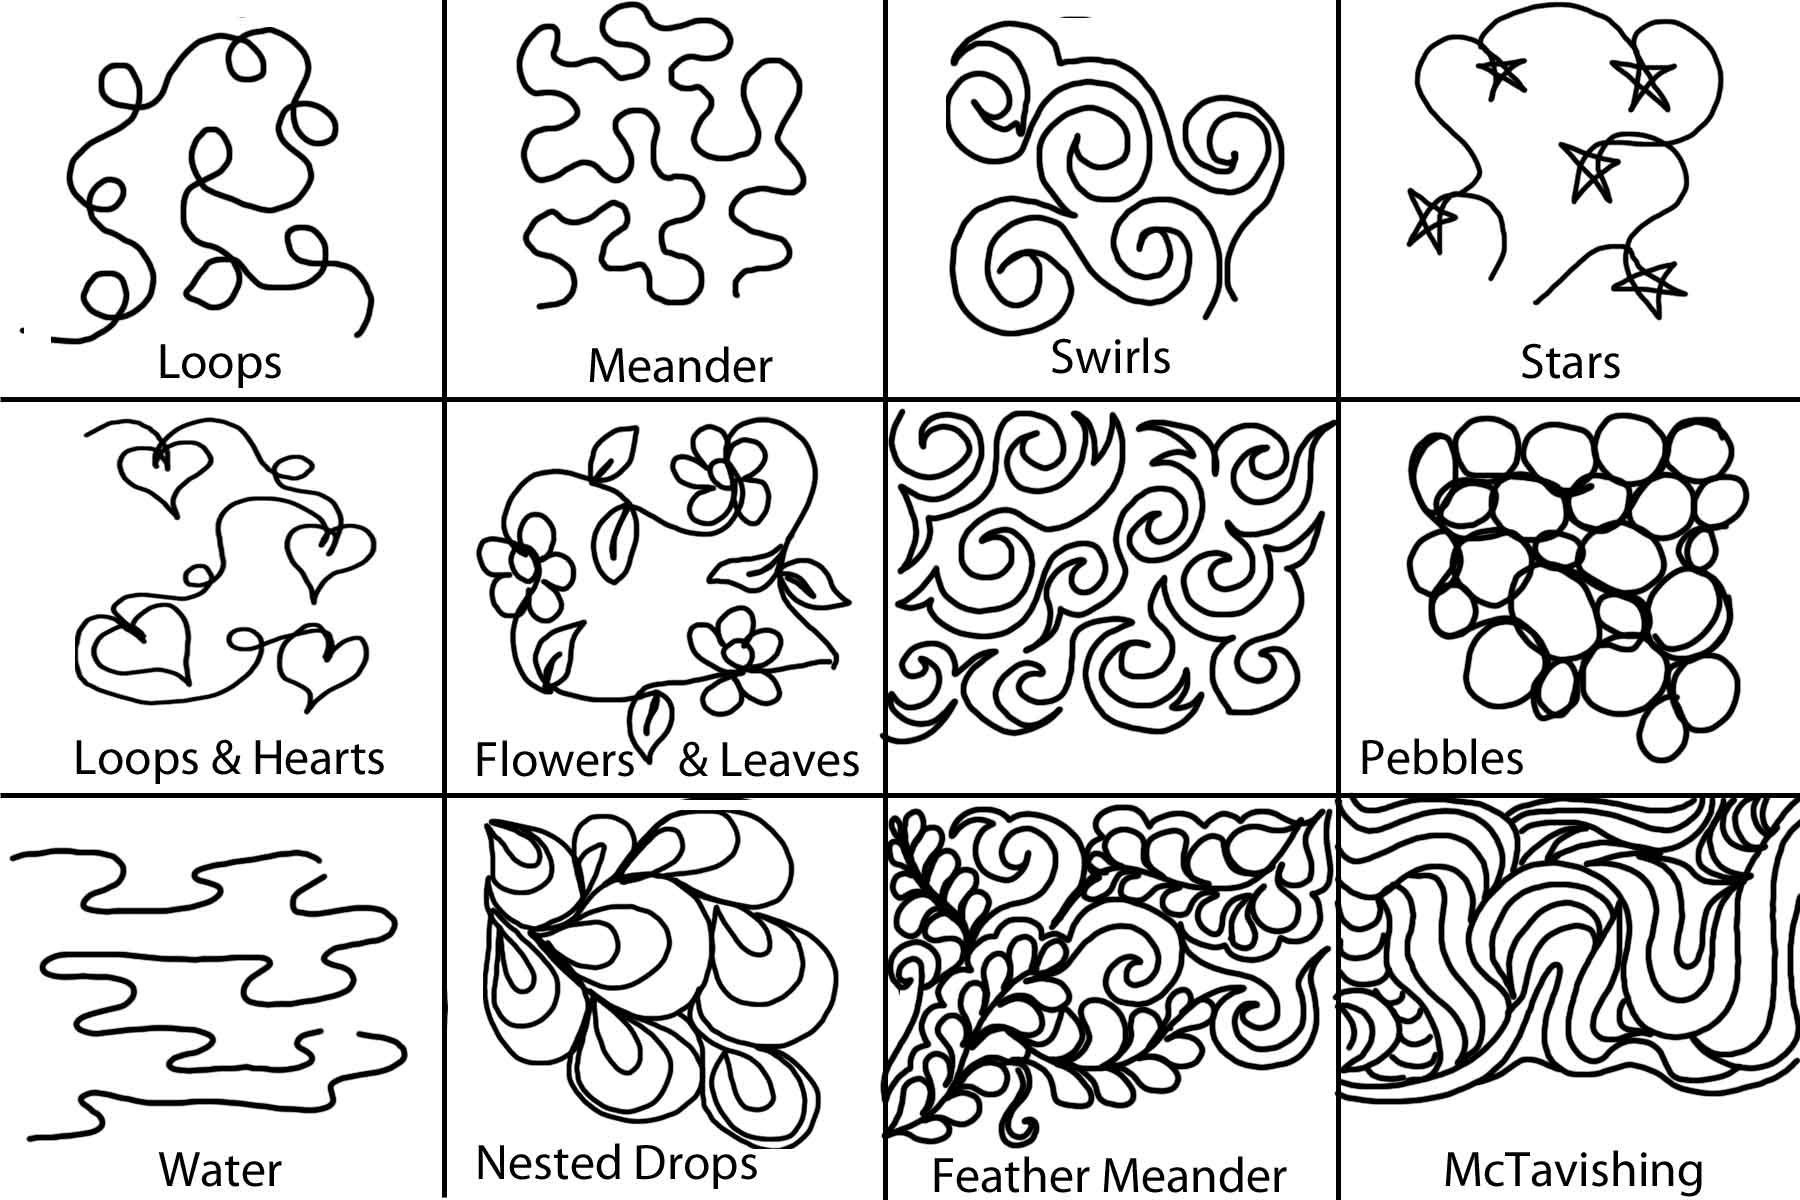 45 Beginner Quilt Patterns And Tutorials 45 Free Easy Quilt Patterns 